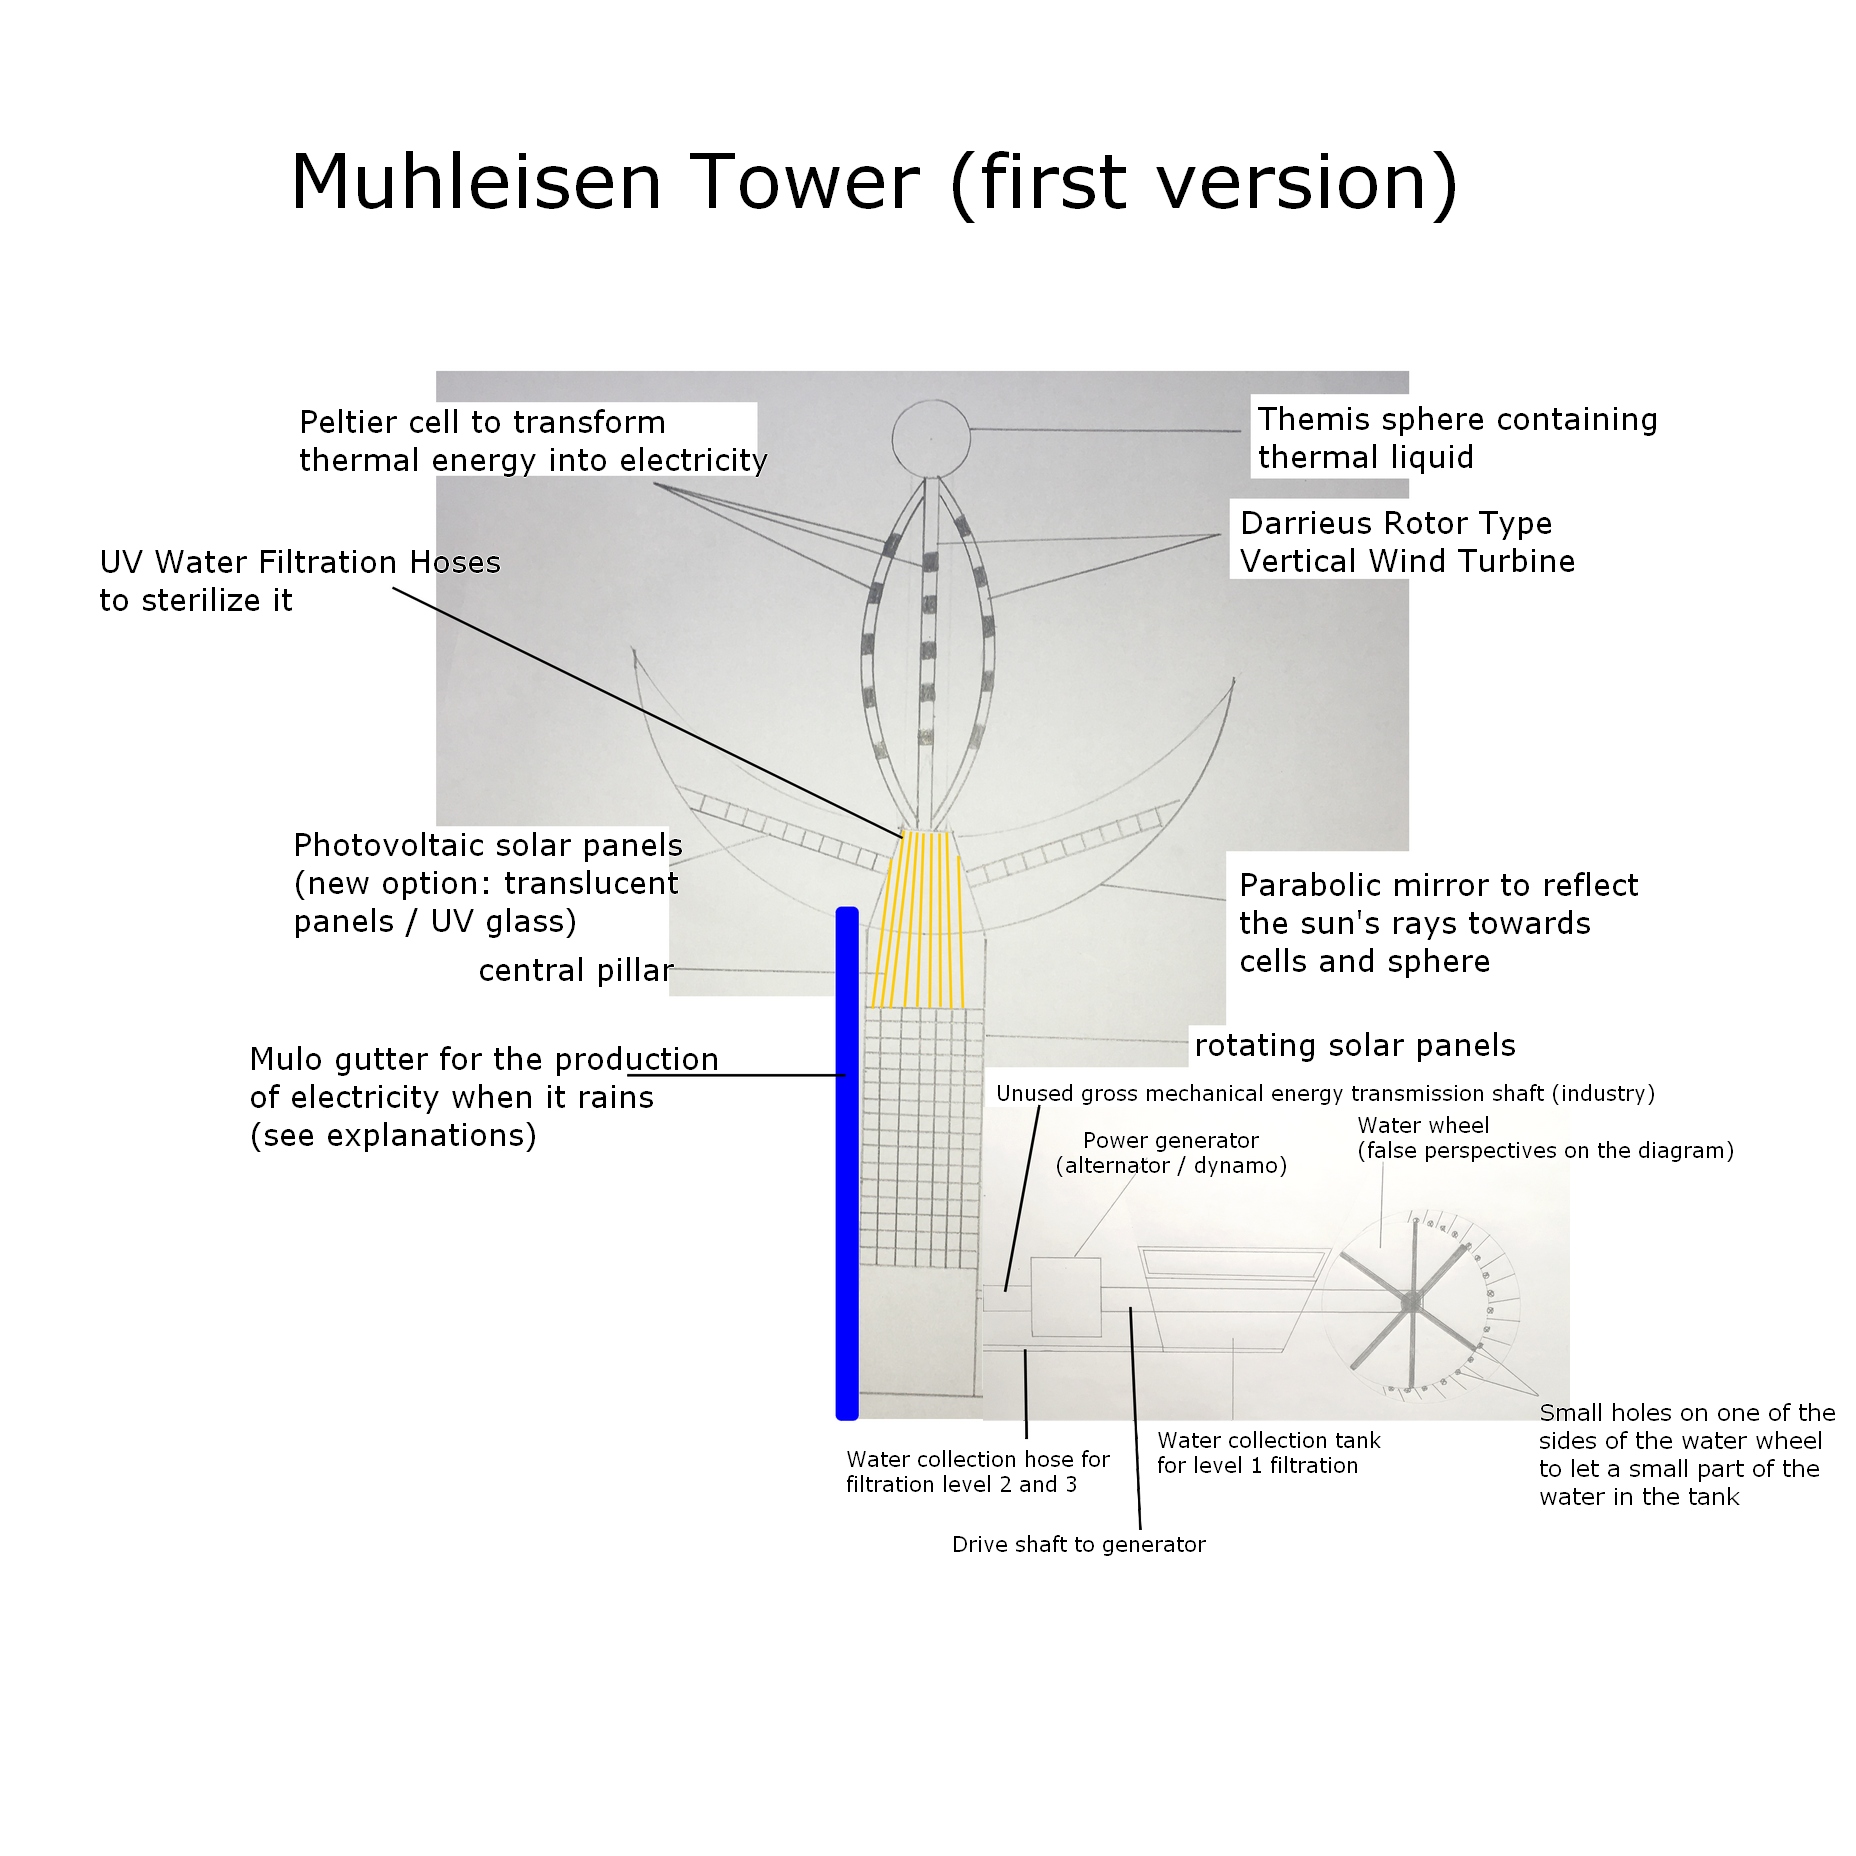 The Muhleisen Tower (first version)